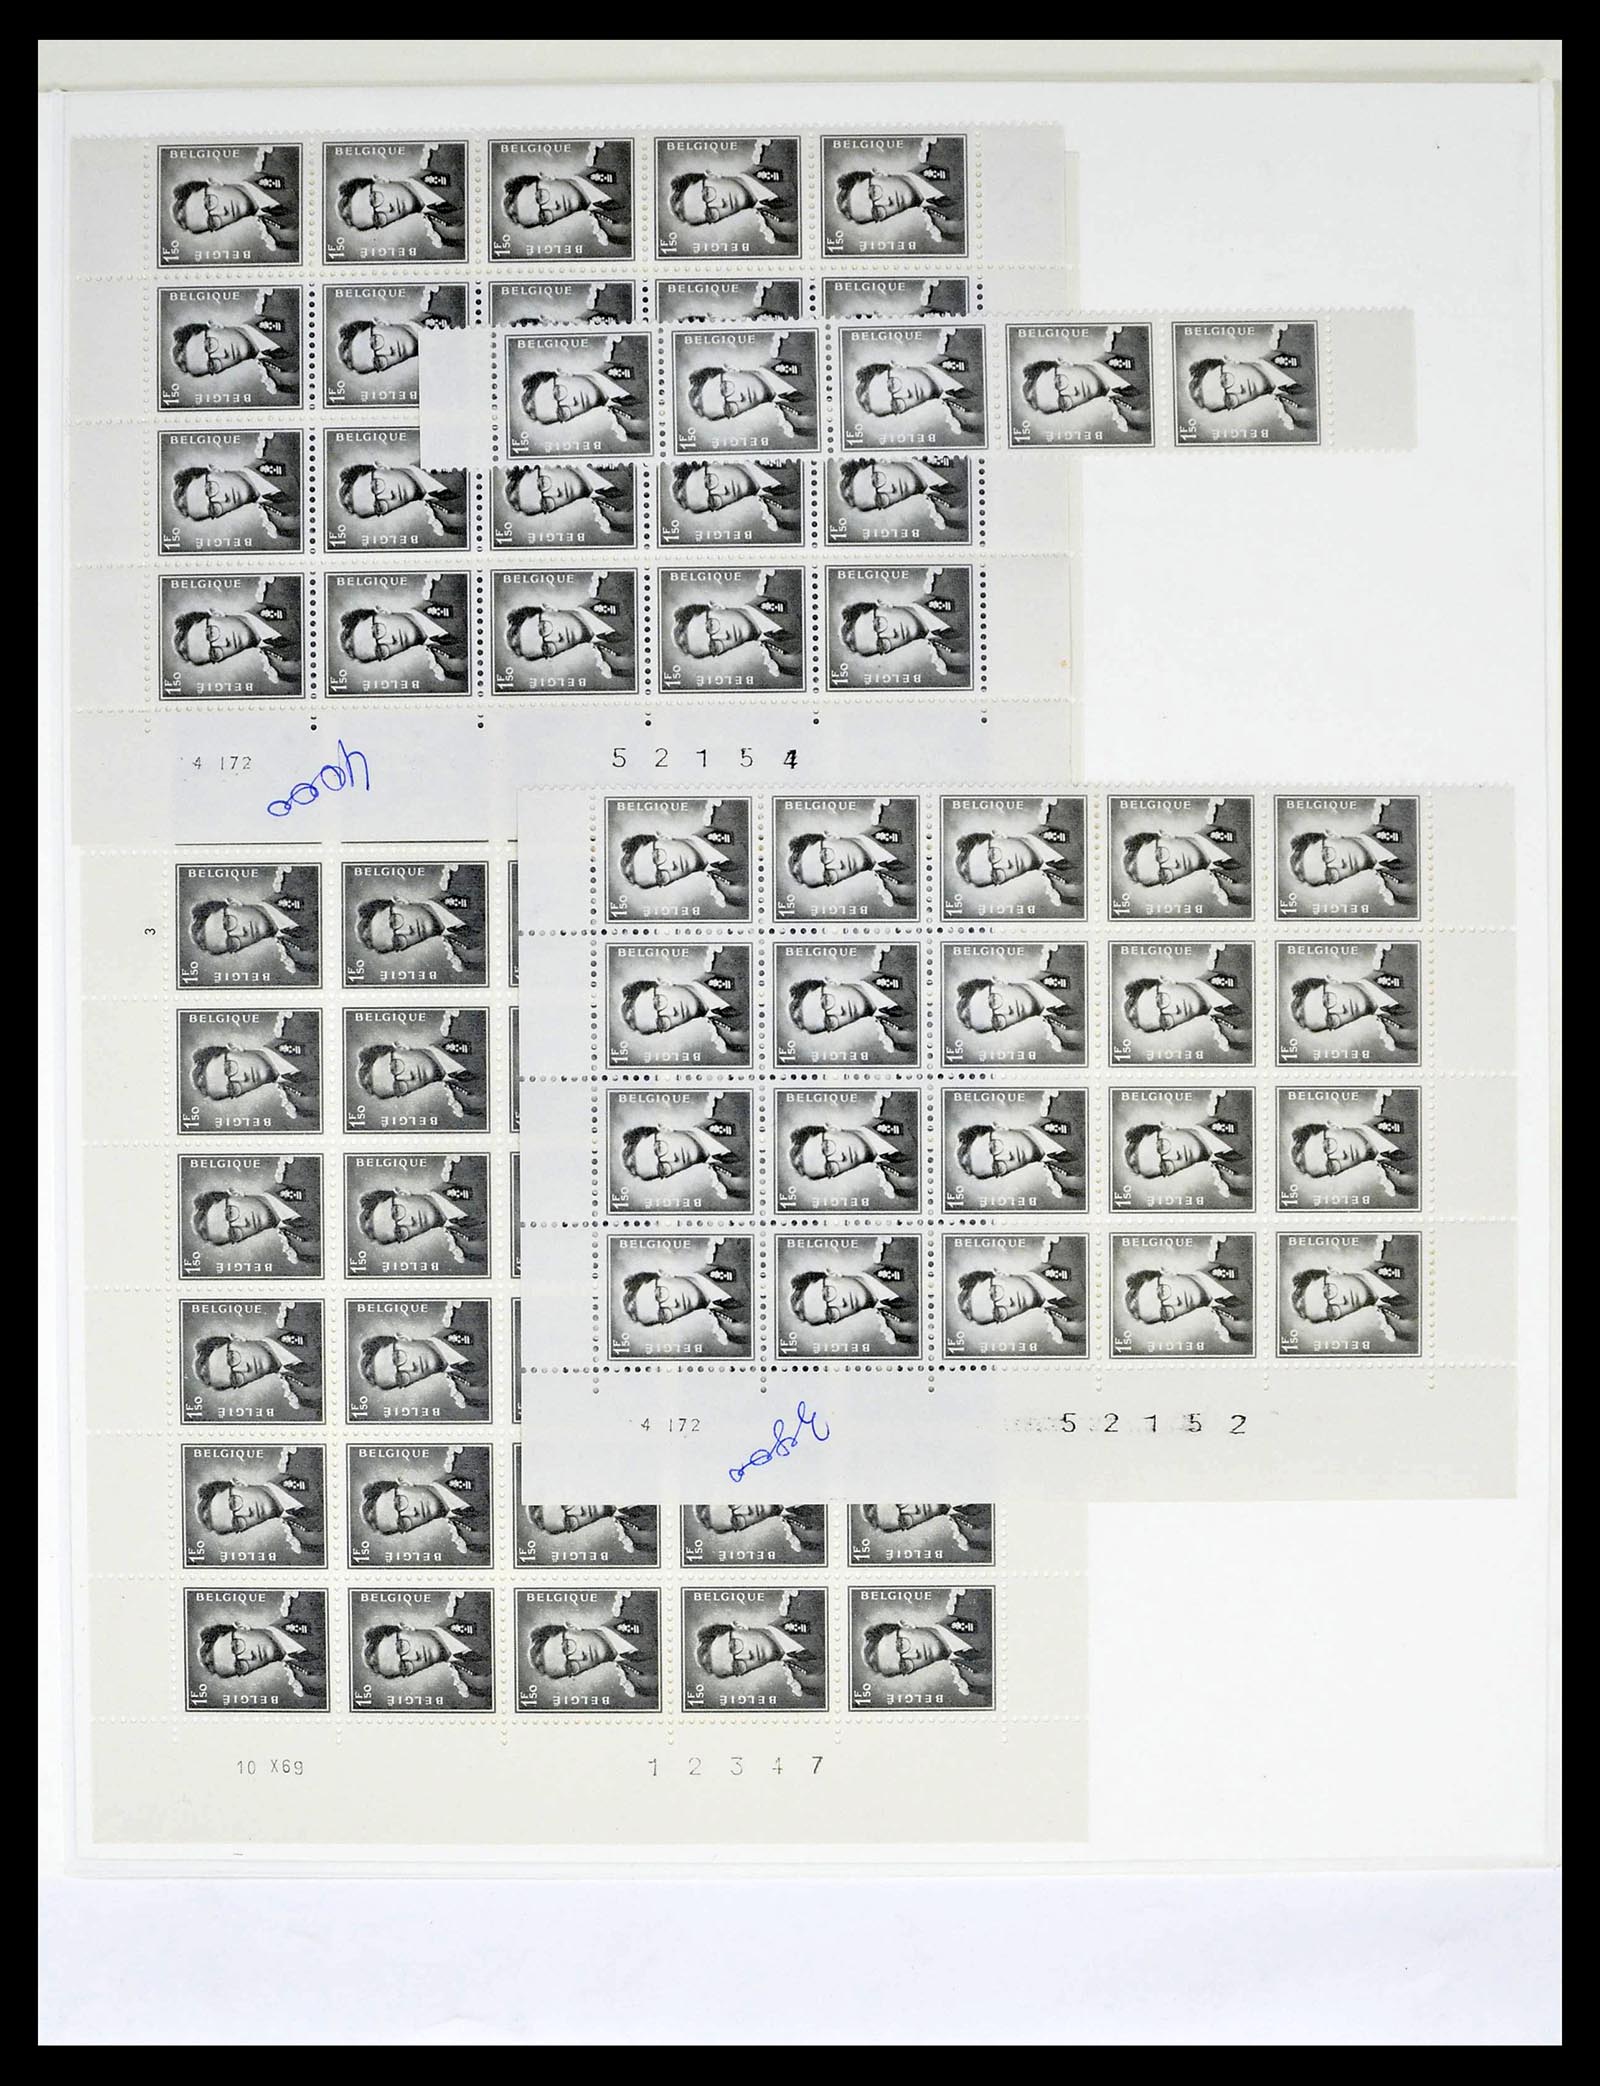 39229 0037 - Stamp collection 39229 Belgium Boudewijn with glasses 1952-1975.